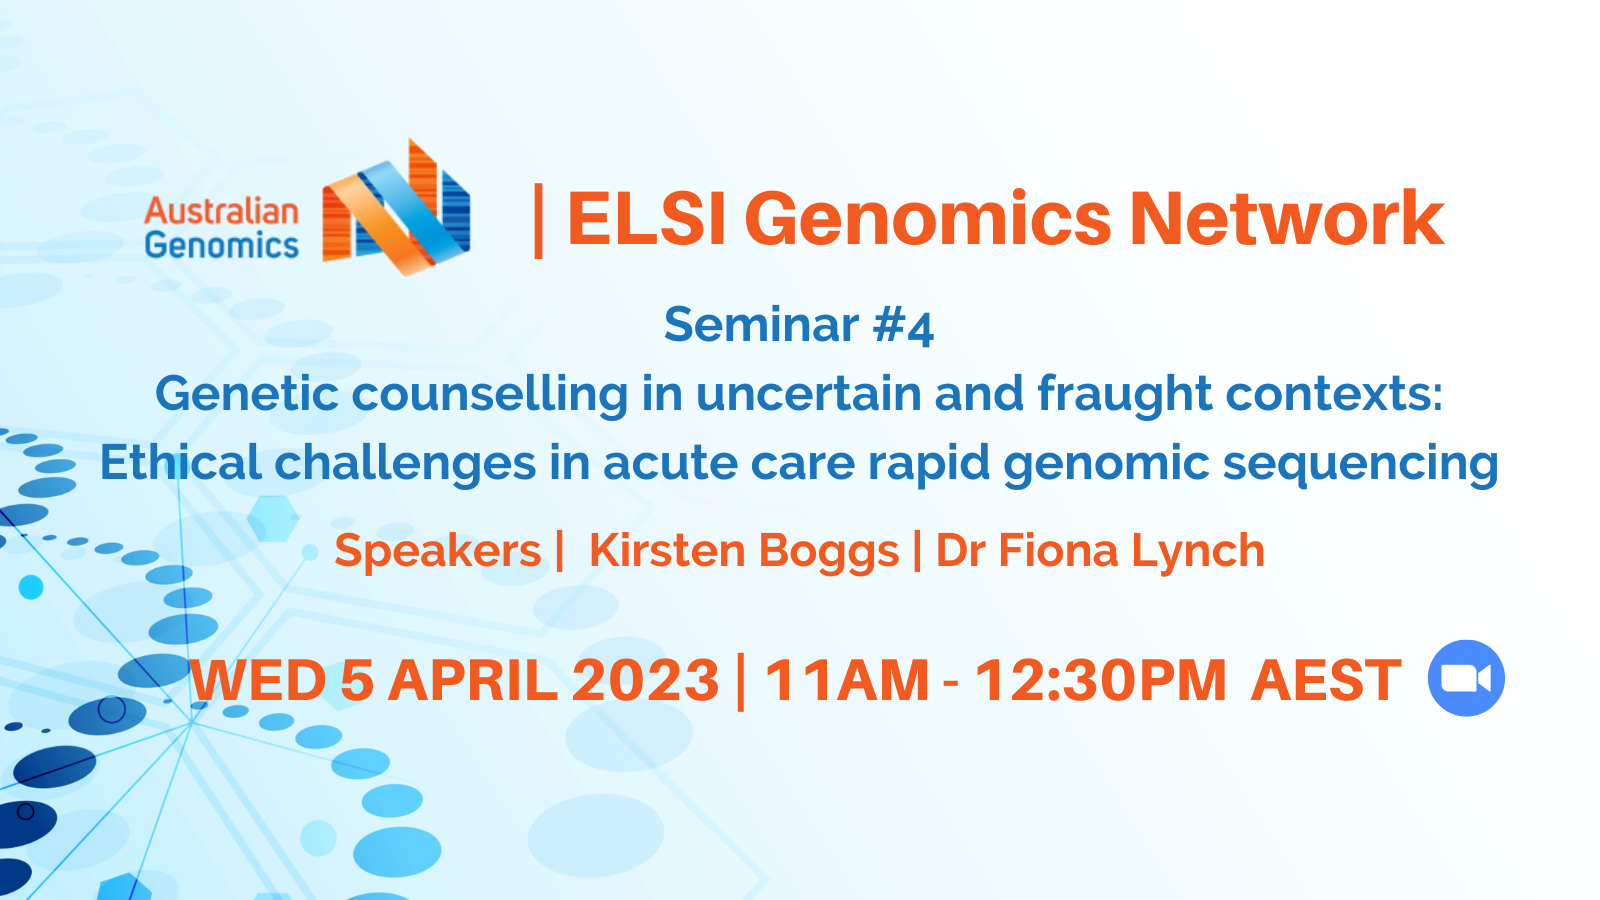 ELSI Genomics Network seminar - Genetic counselling in uncertain contexts: acute care rapid genomic sequencing